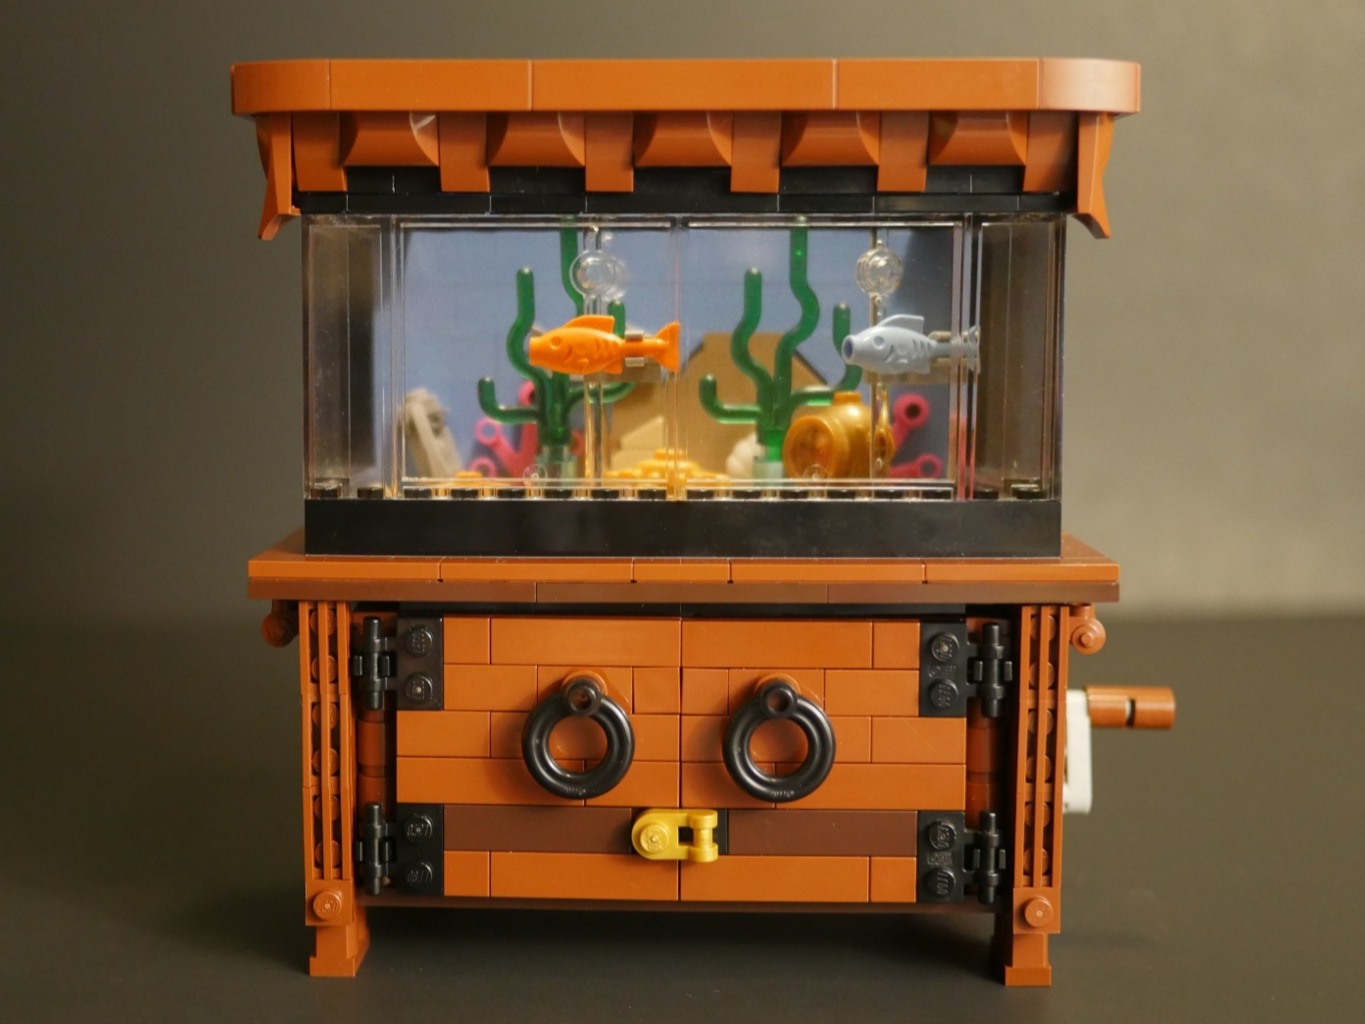 Lego Clockwork Aquarium – a Mechanical Delight